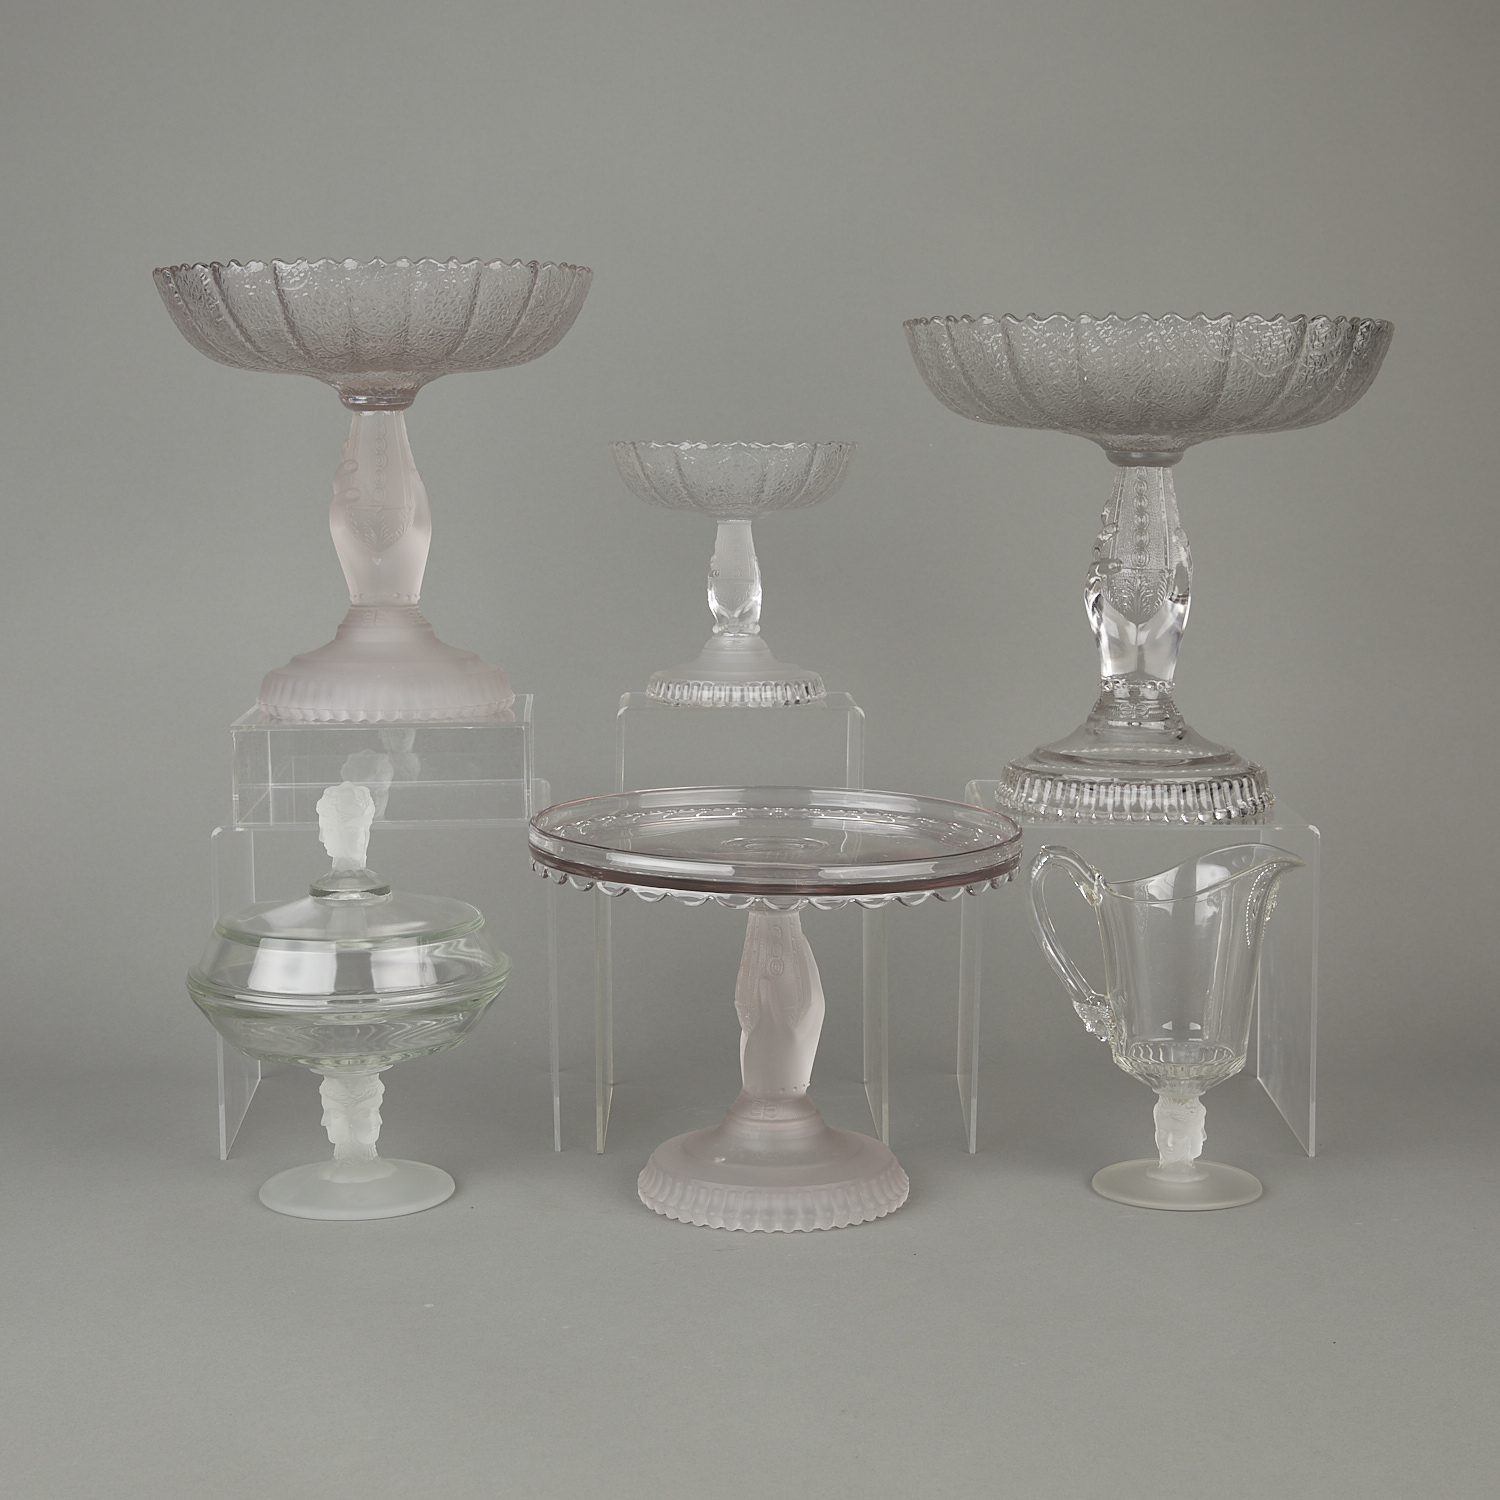 6 George Duncan Glassware ca. 1890-1910 - Image 4 of 18